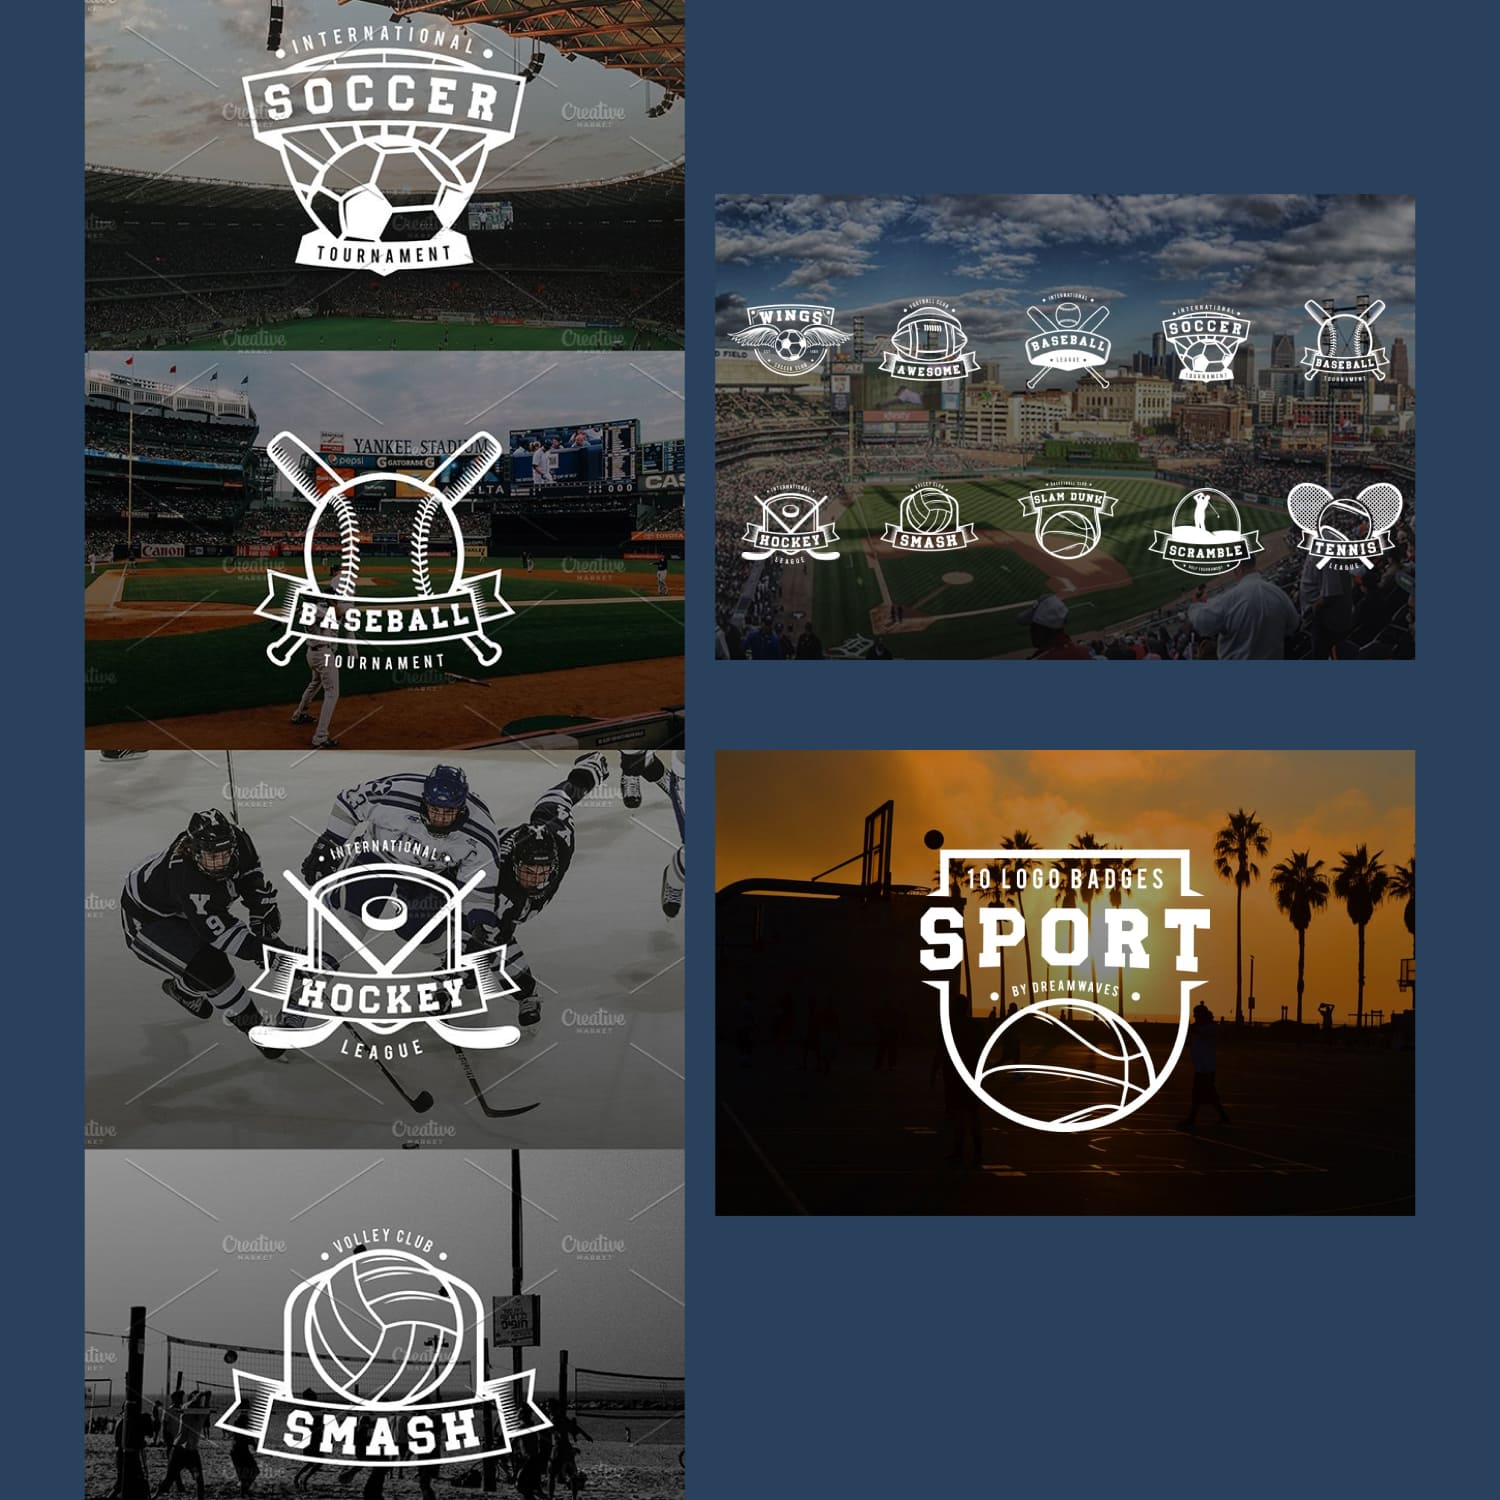 10 logo badges sport cover.